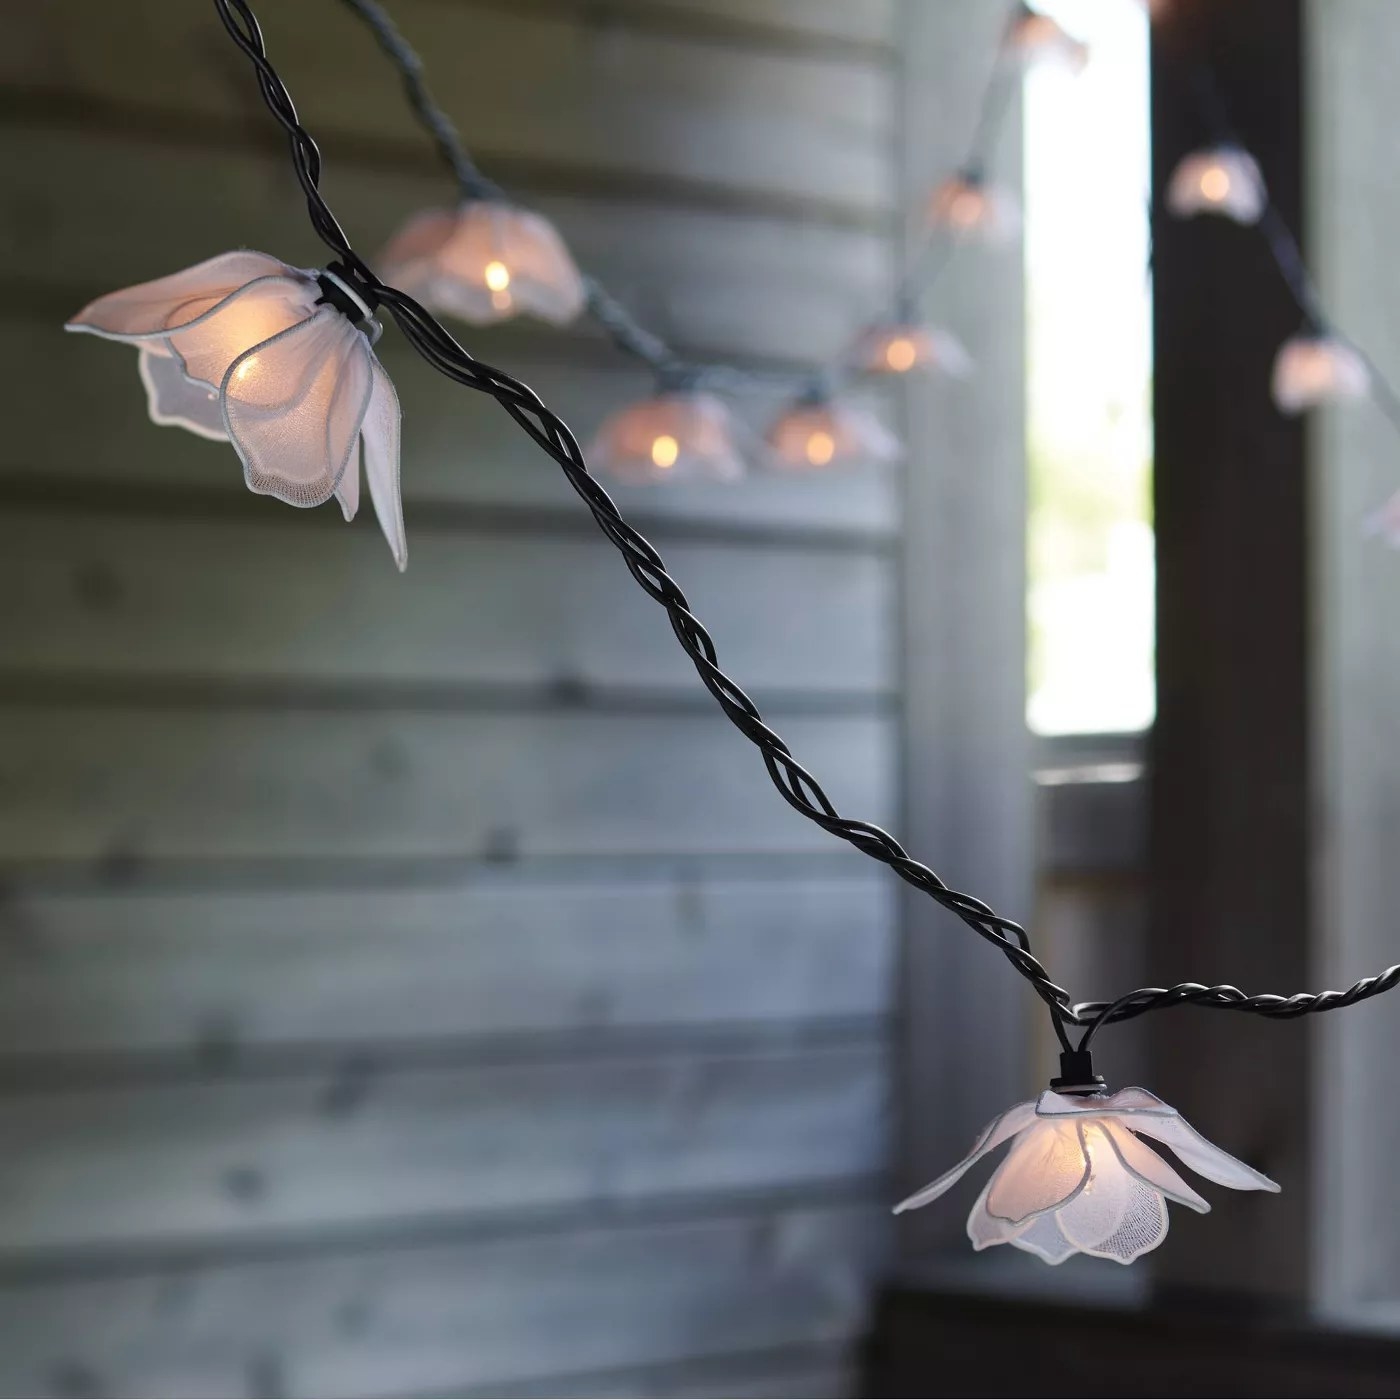 The flower string lights